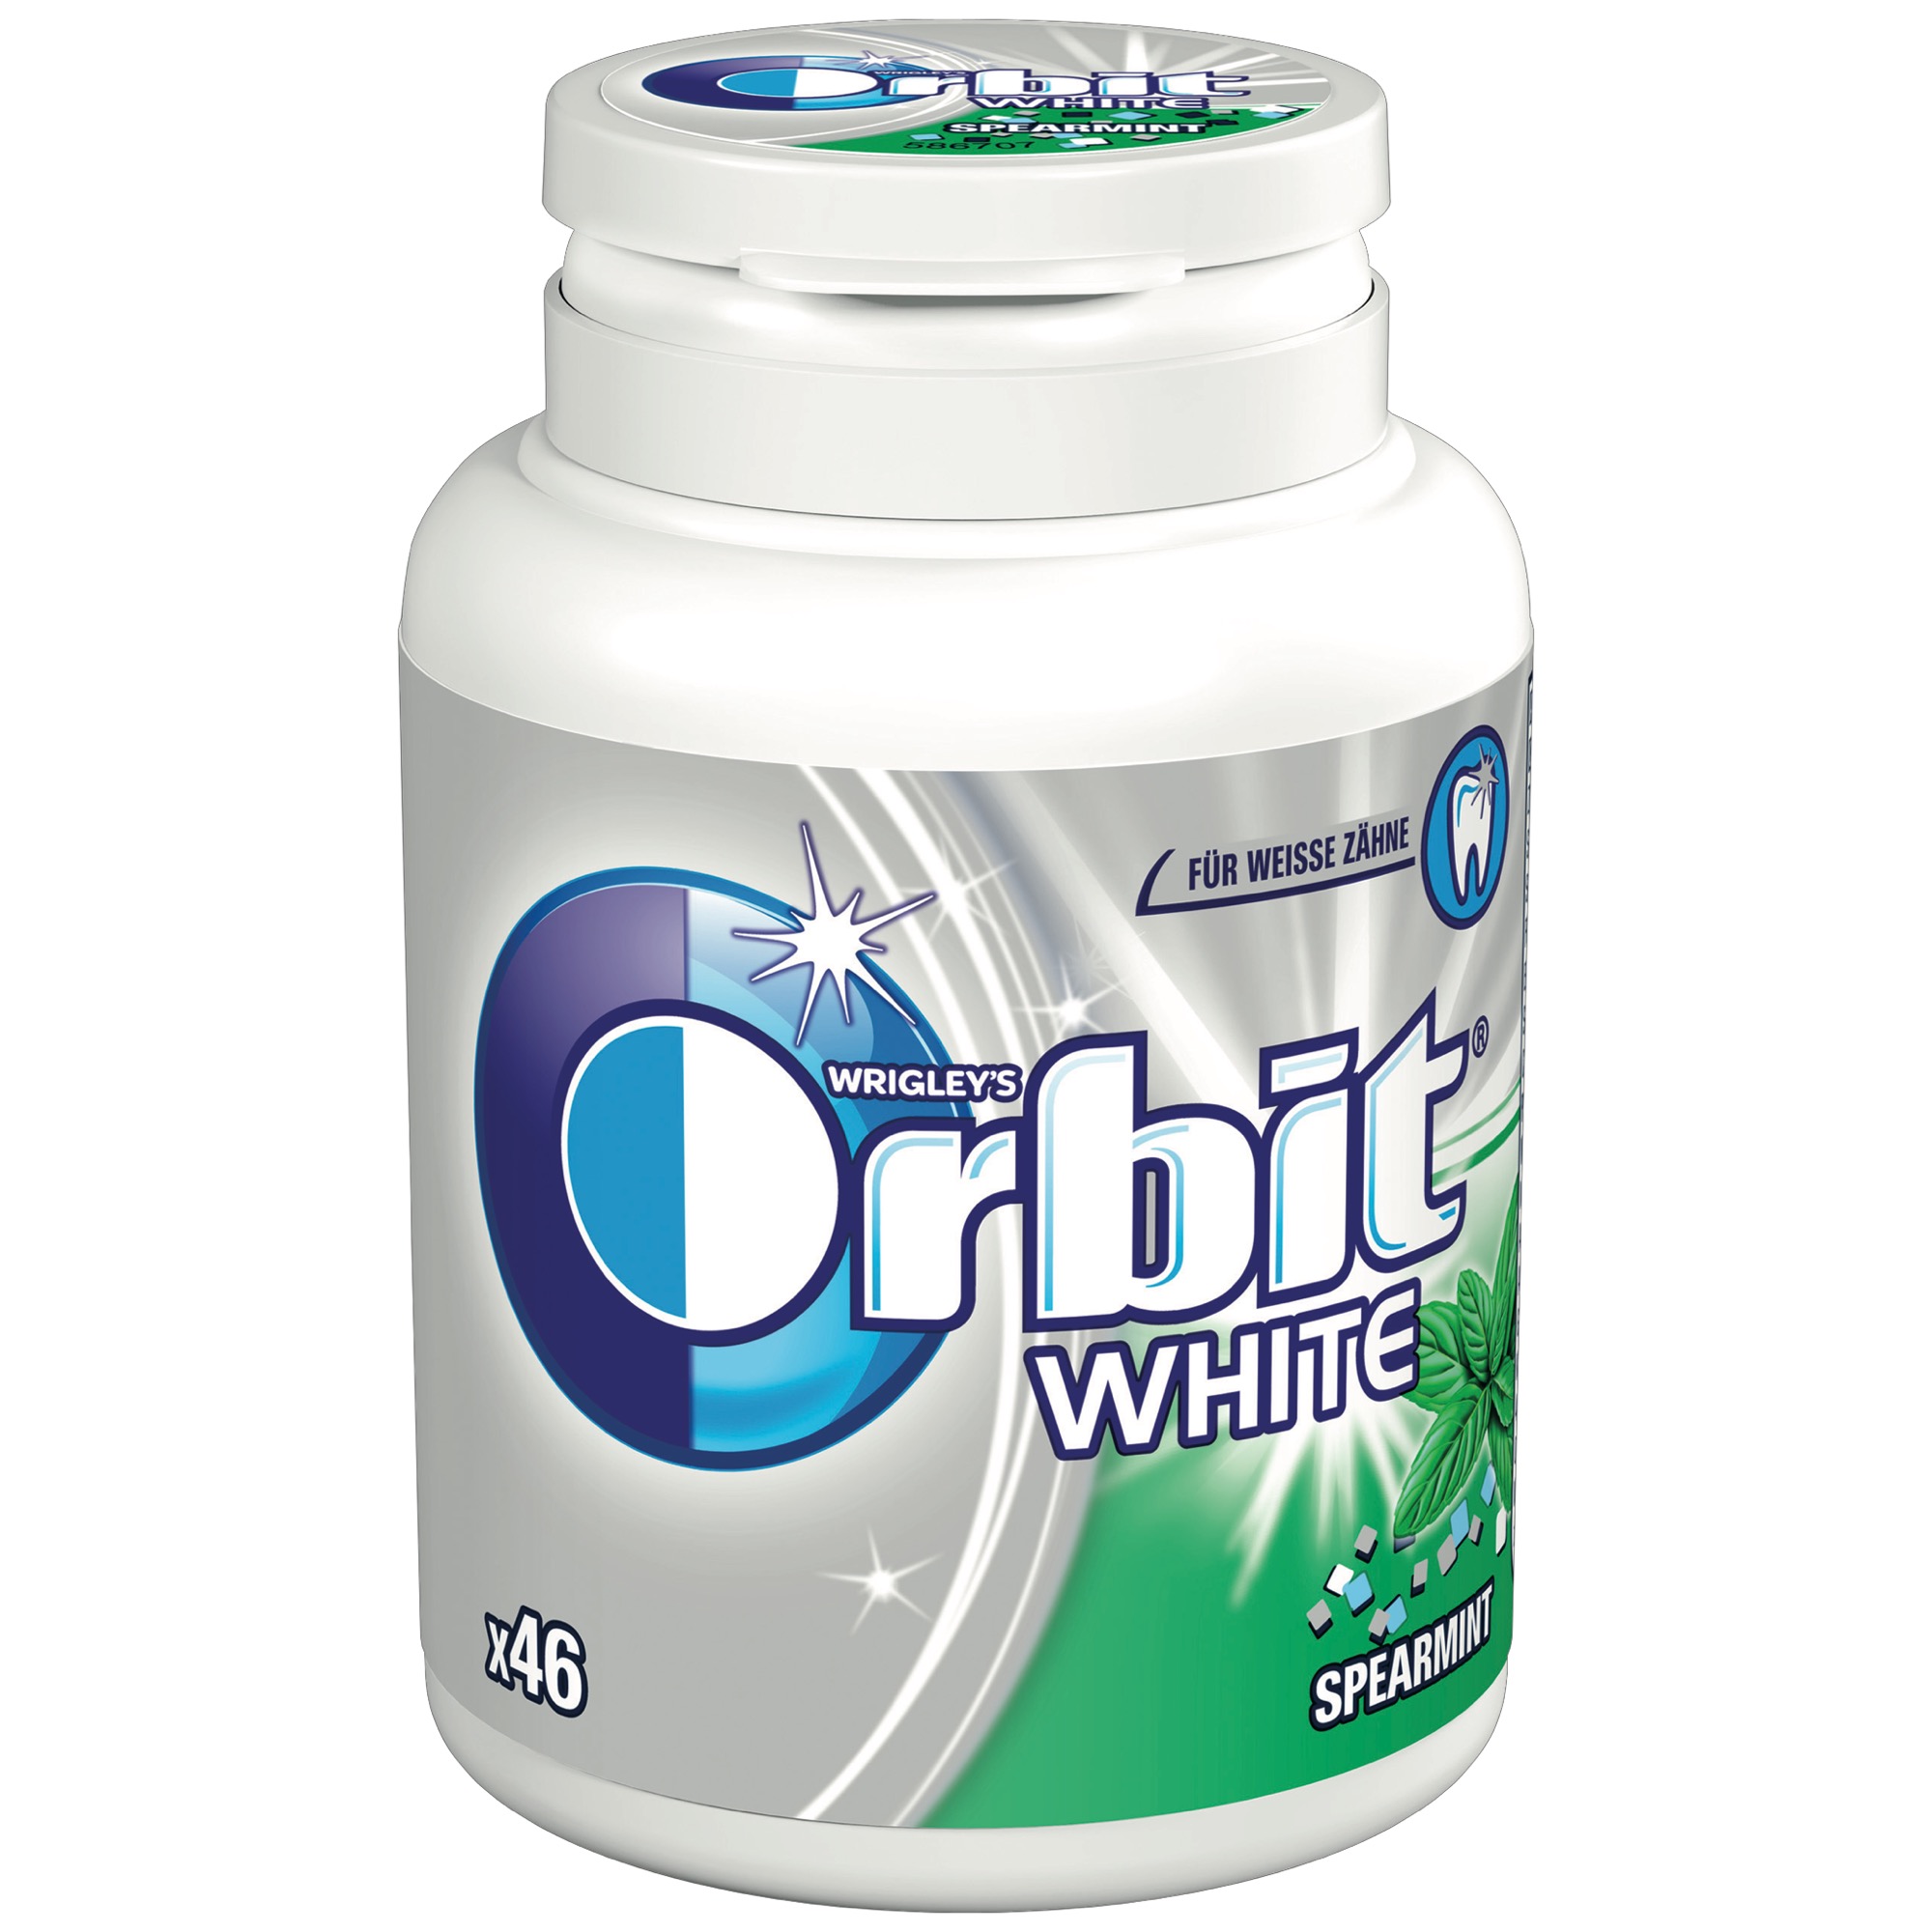 Orbit White Bottle 46 Dragees, Spearmint